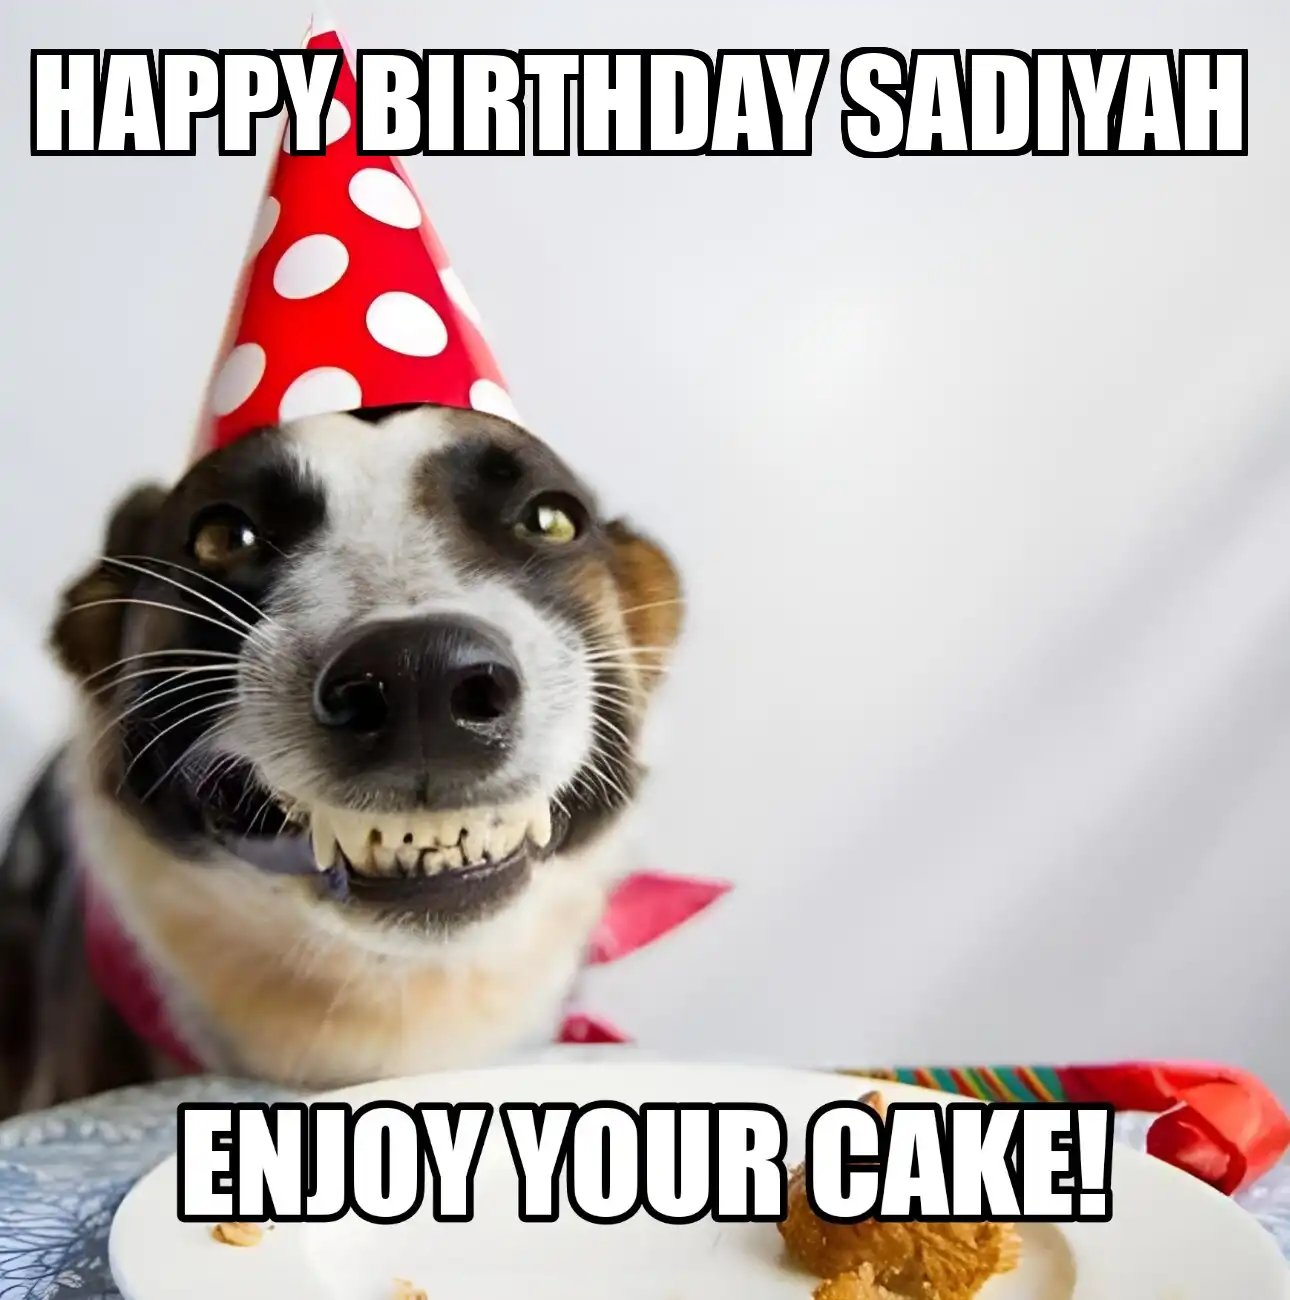 Happy Birthday Sadiyah Enjoy Your Cake Dog Meme